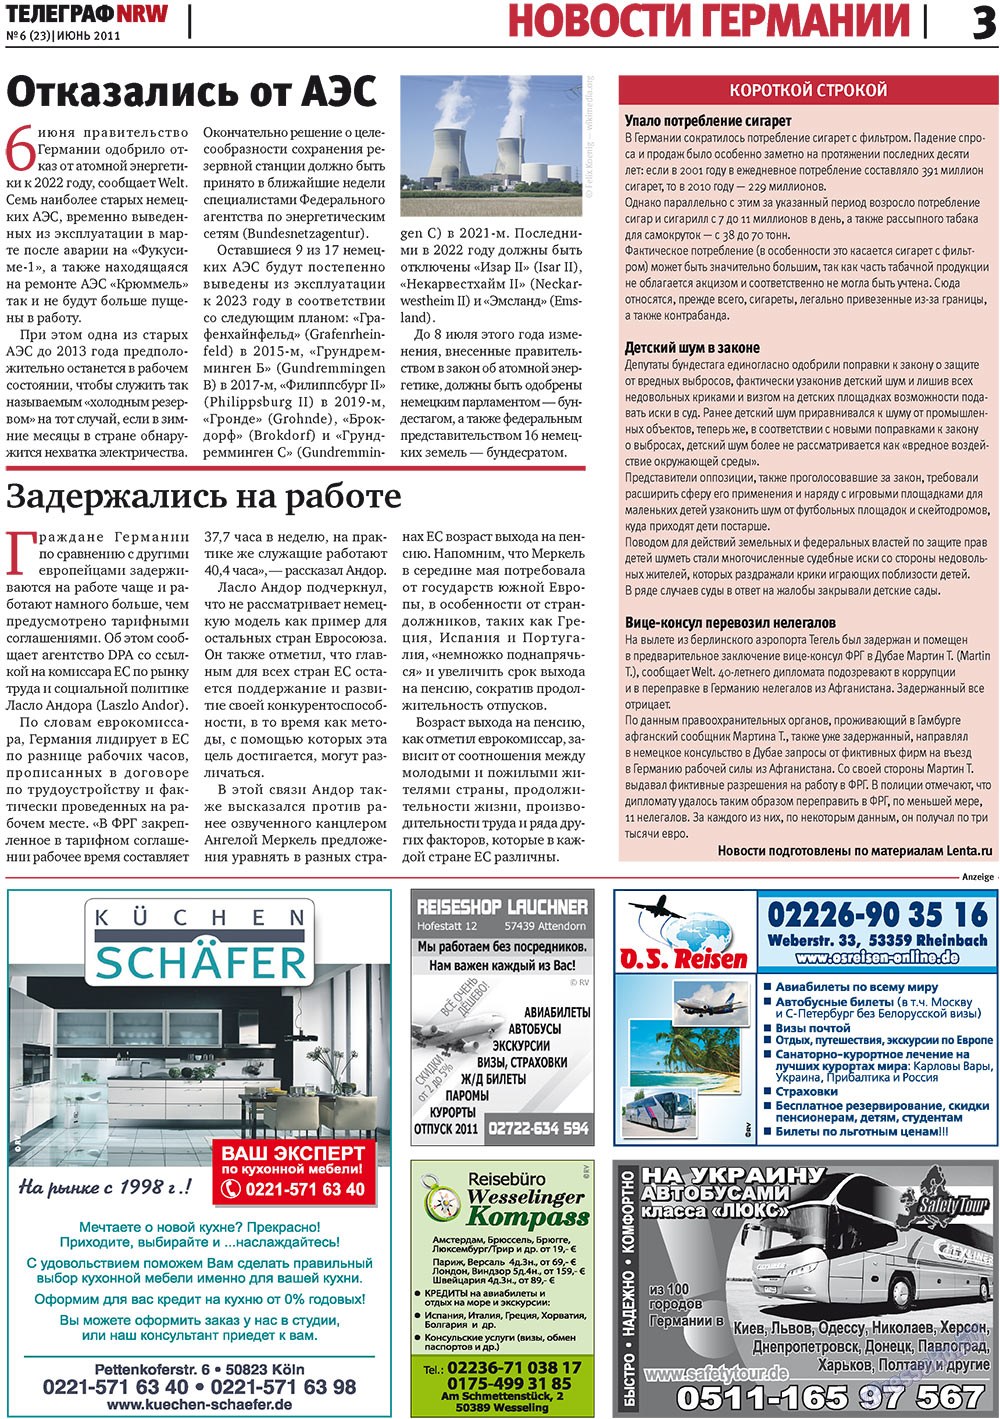 Телеграф NRW, газета. 2011 №6 стр.3